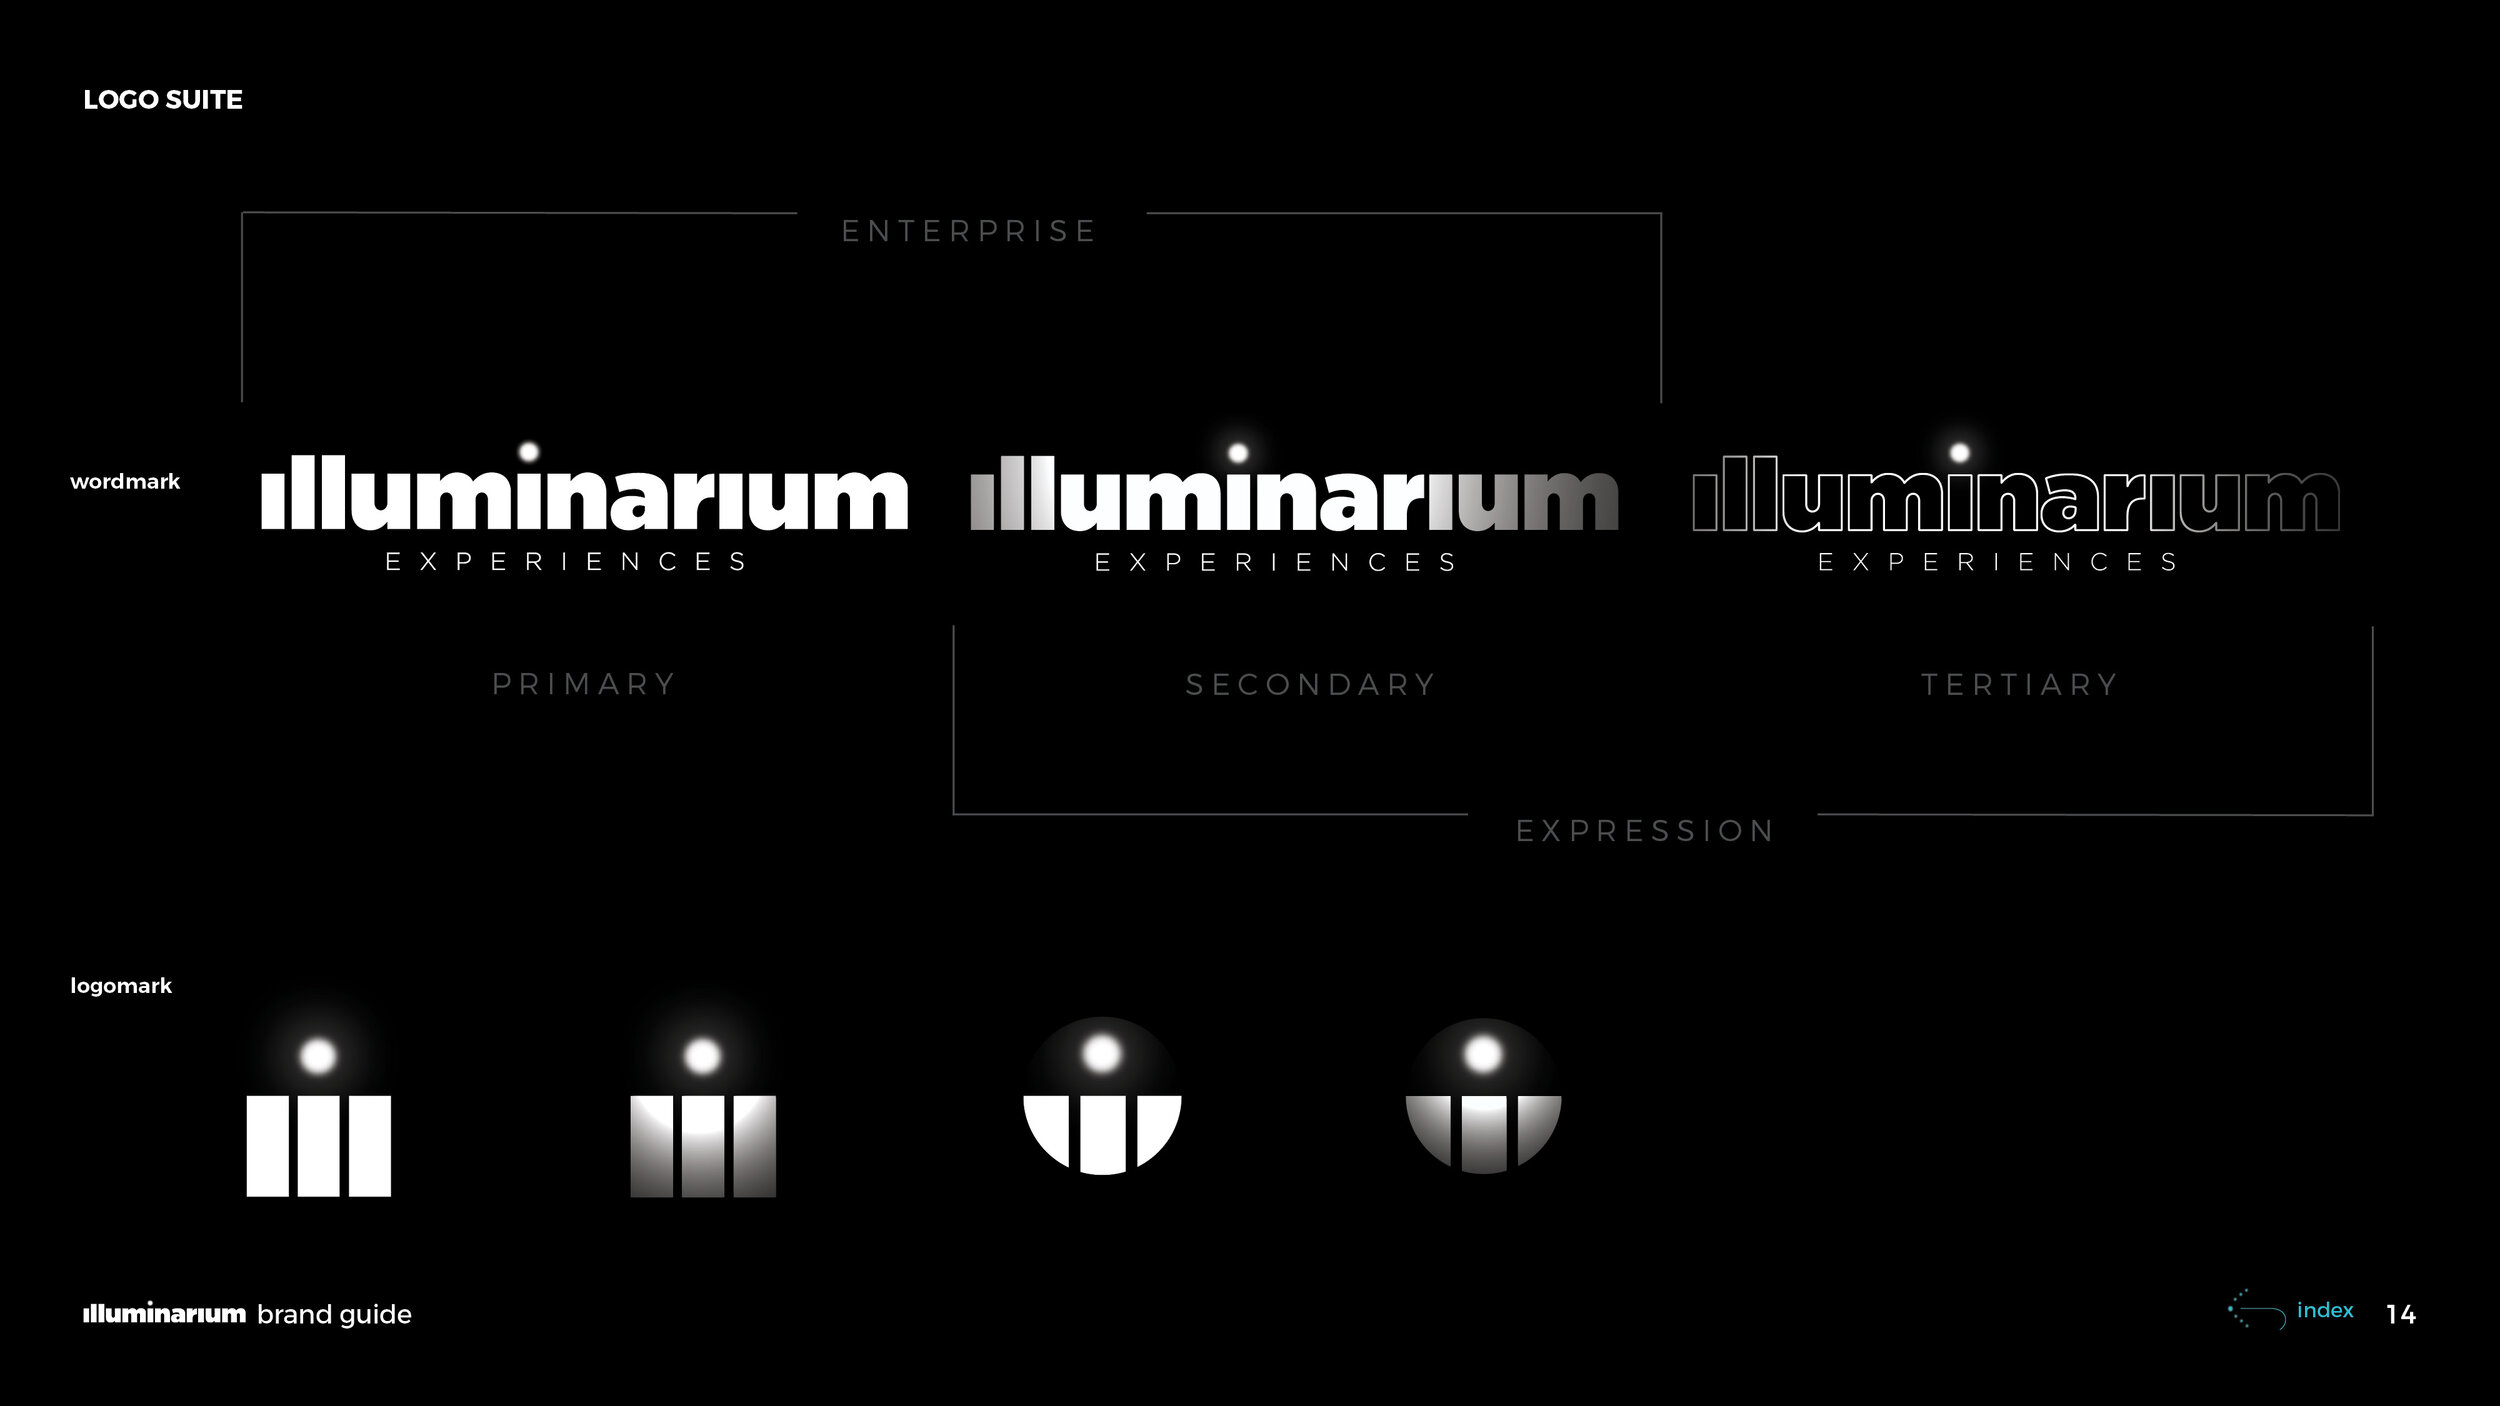 illuminarium_brand guide_16:9_May2020GD_final14.jpg